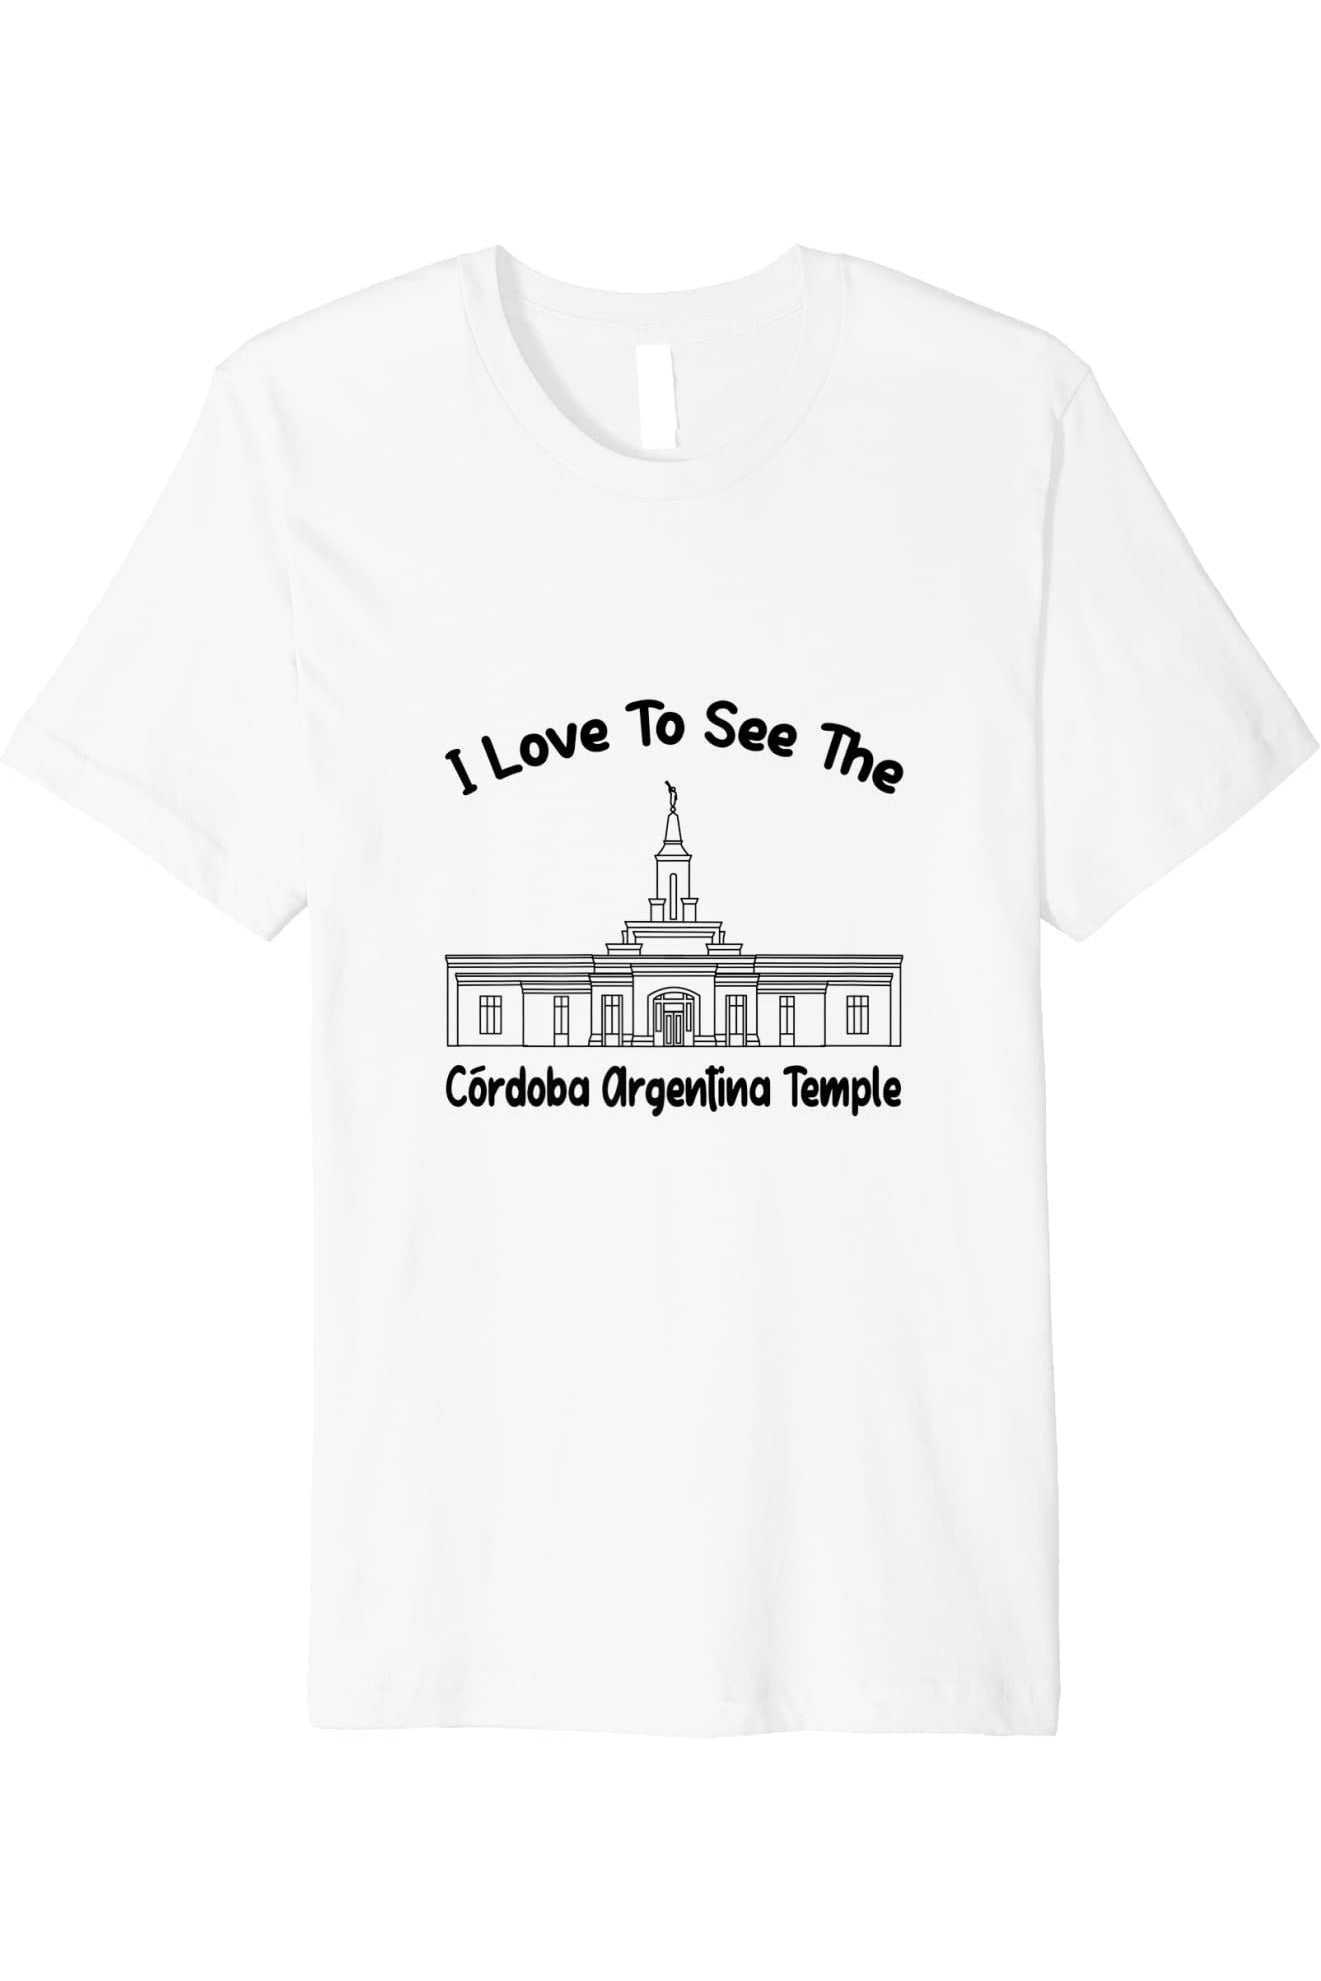 Cordoba Argentina Temple T-Shirt - Premium - Primary Style (English) US